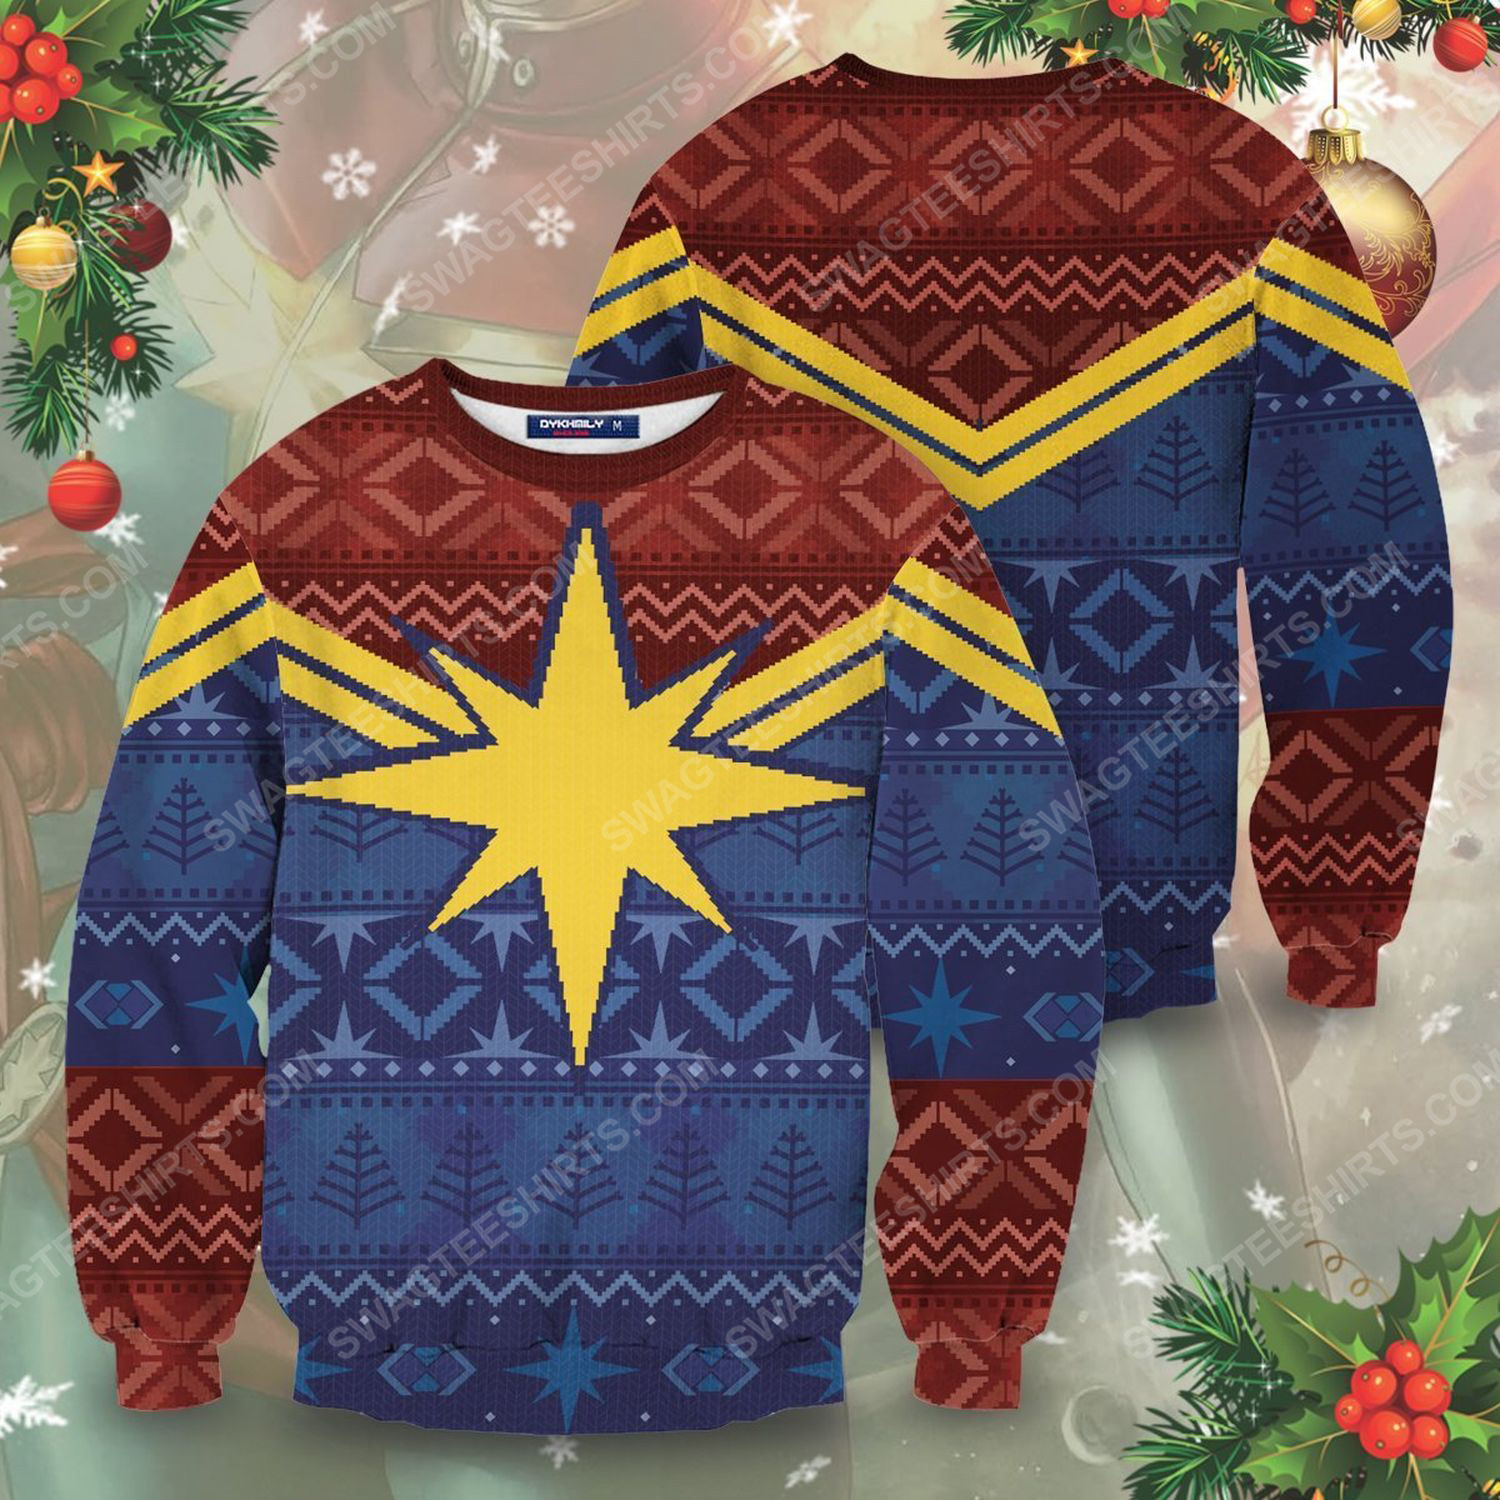 Protector of christmas skies full print ugly christmas sweater 2